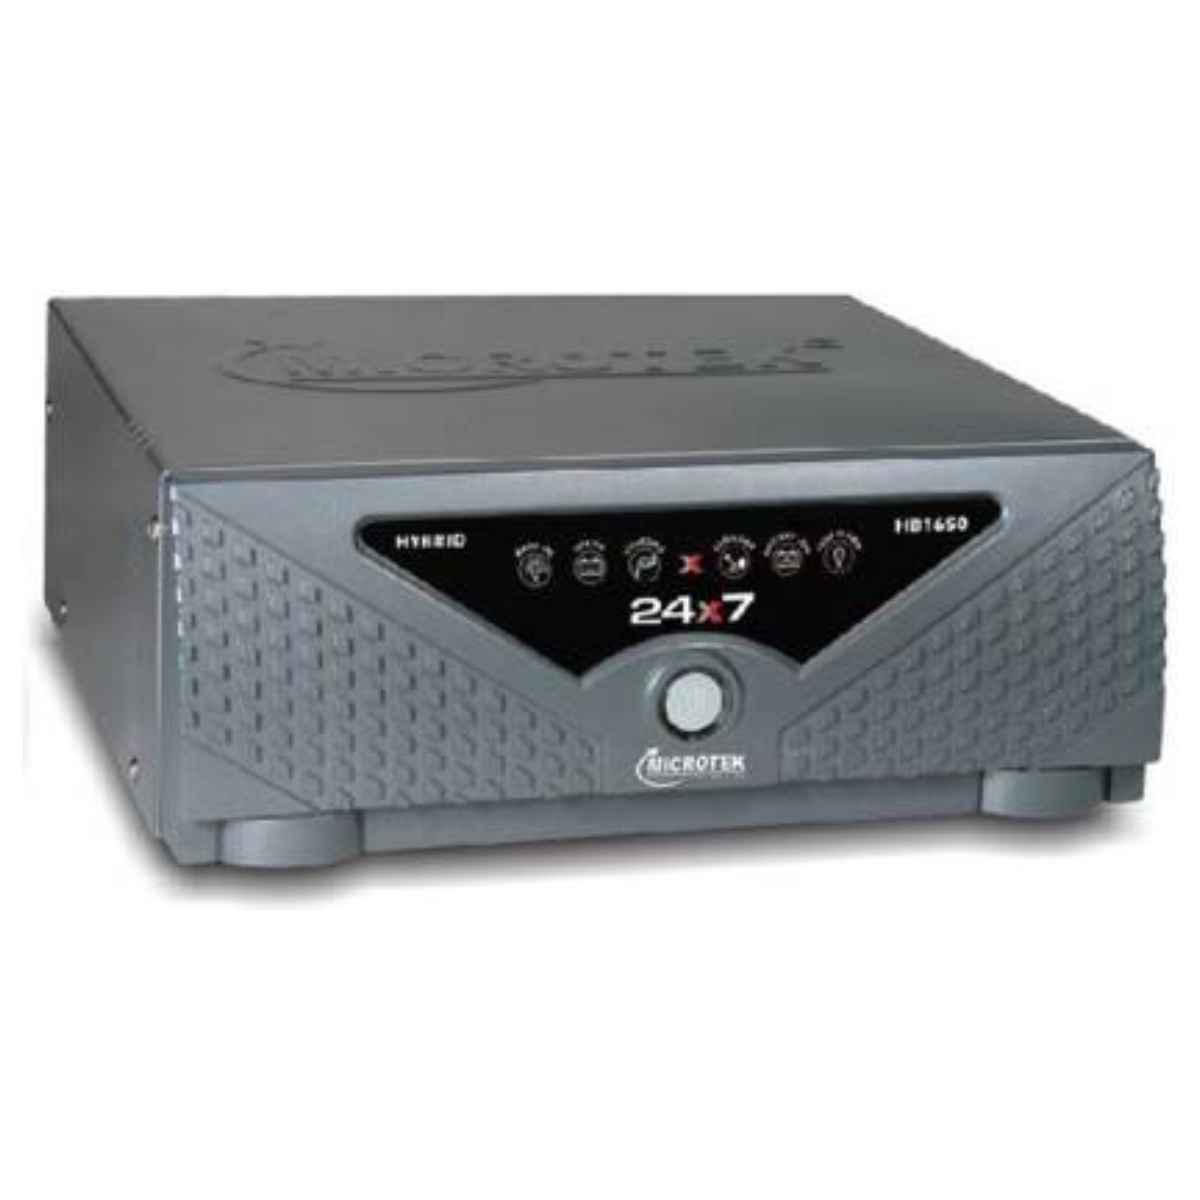 Microtek UPS 24X7 HB 1650 VA Pure Sine Wave Inverter 